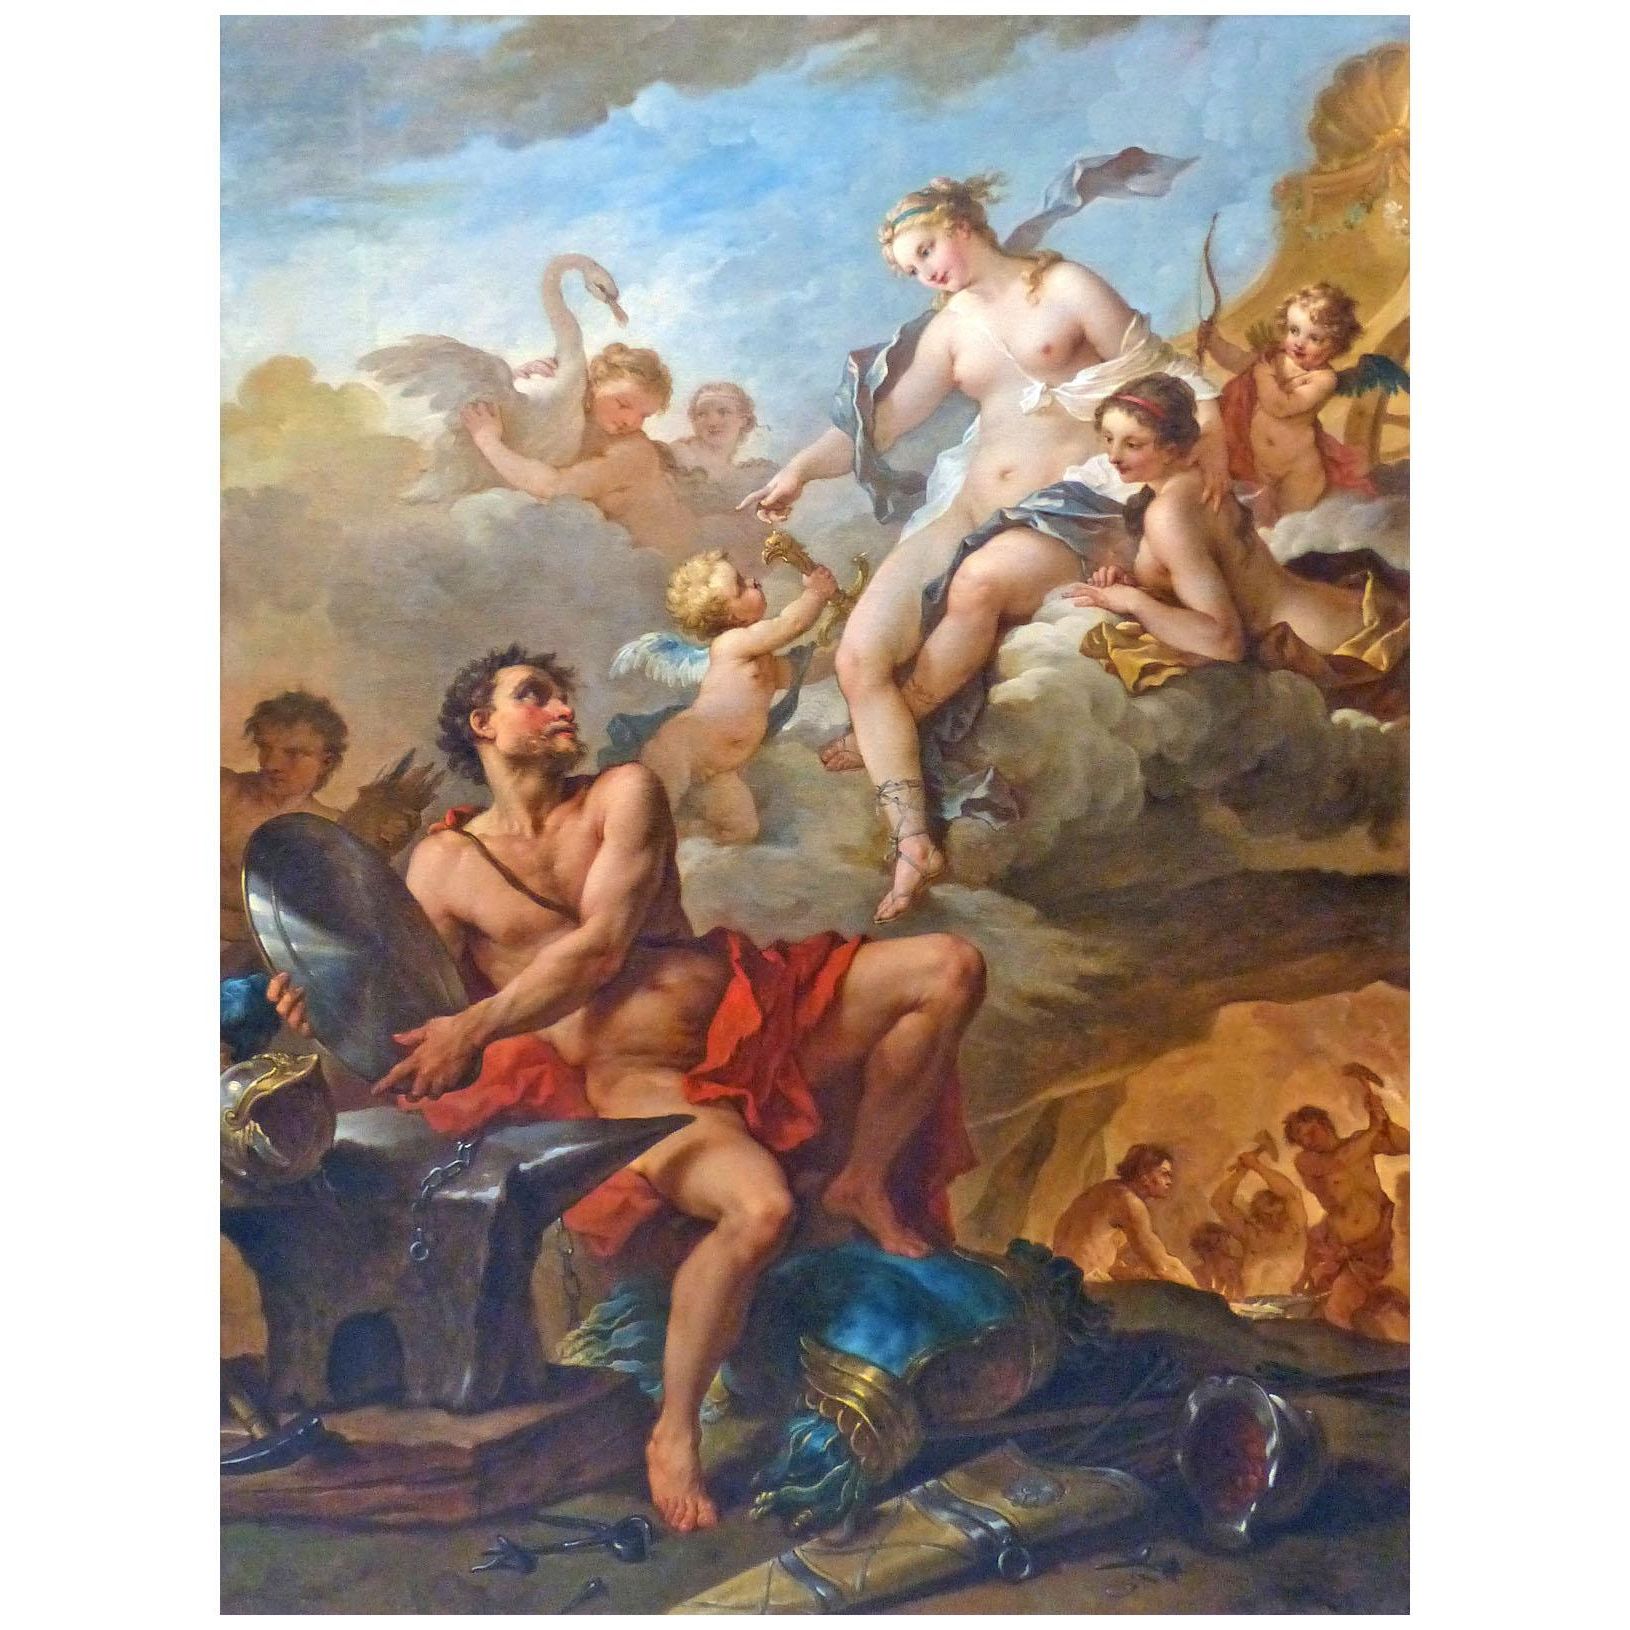 Charles-Joseph Natoire. Venus demande des armes a Vulcain. 1734. Musee Fabre Montpellier